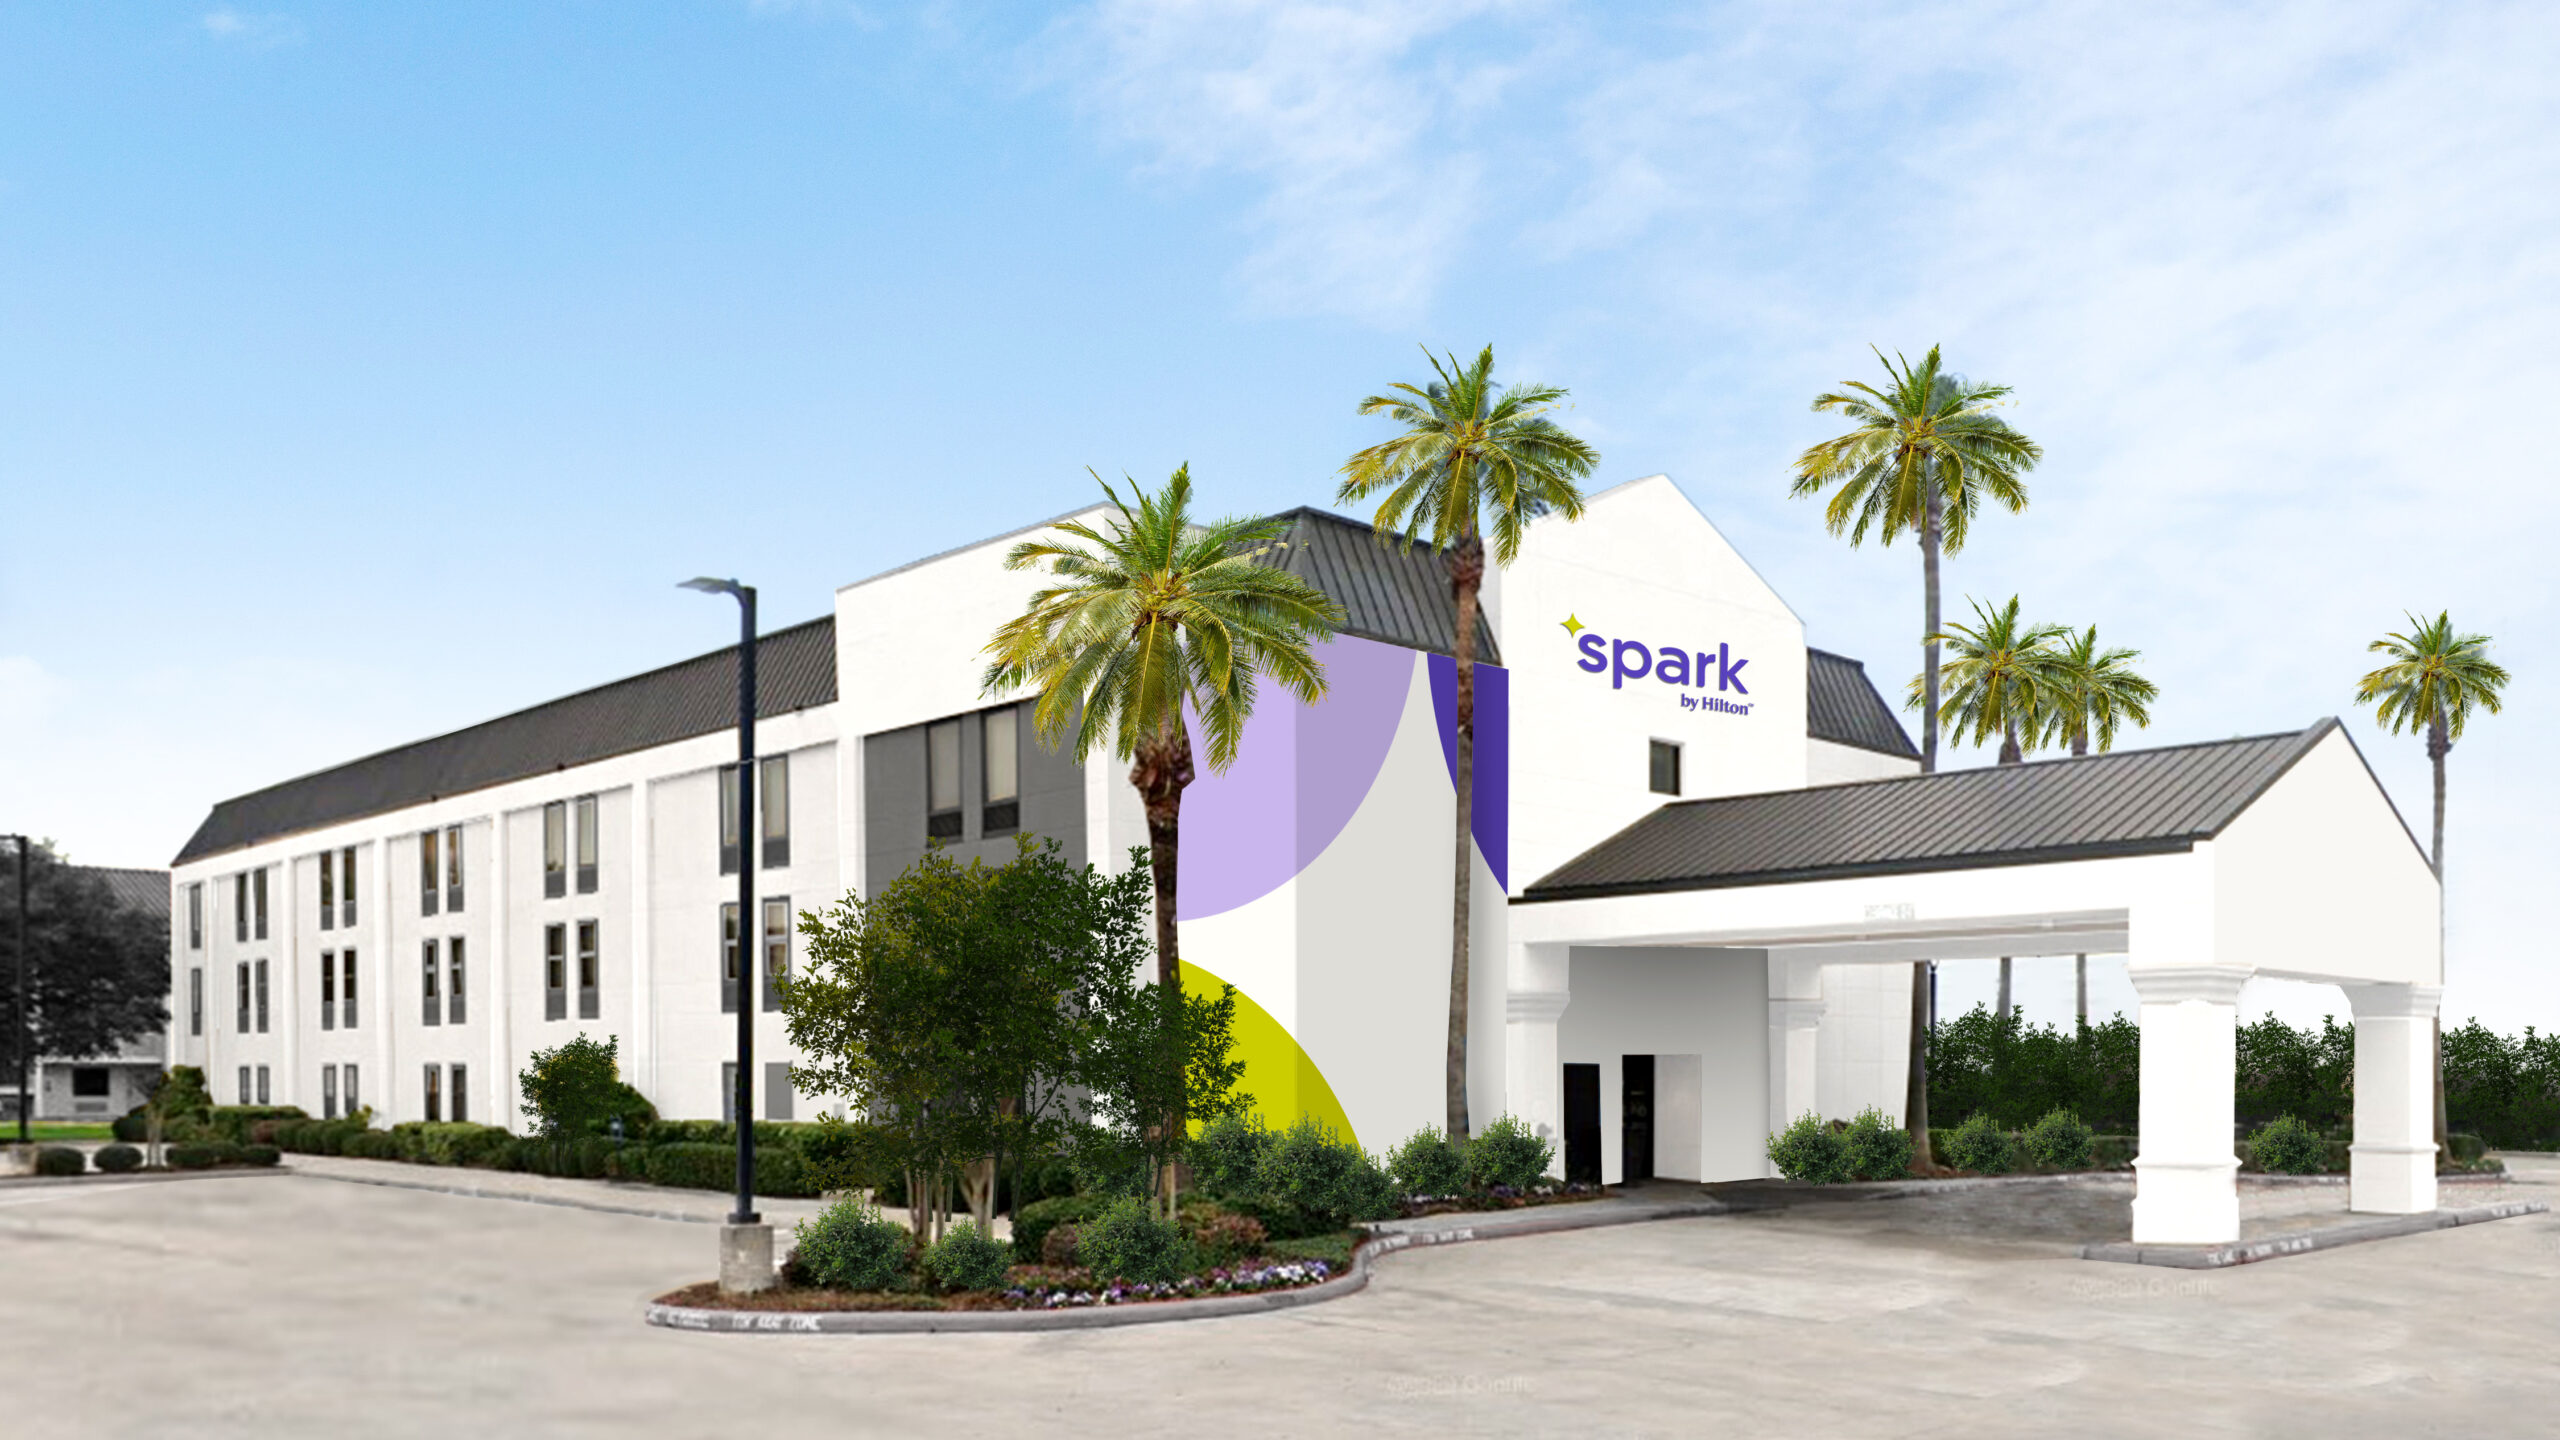 Spark by Hilton – New Premium Brand Announced by Hilton